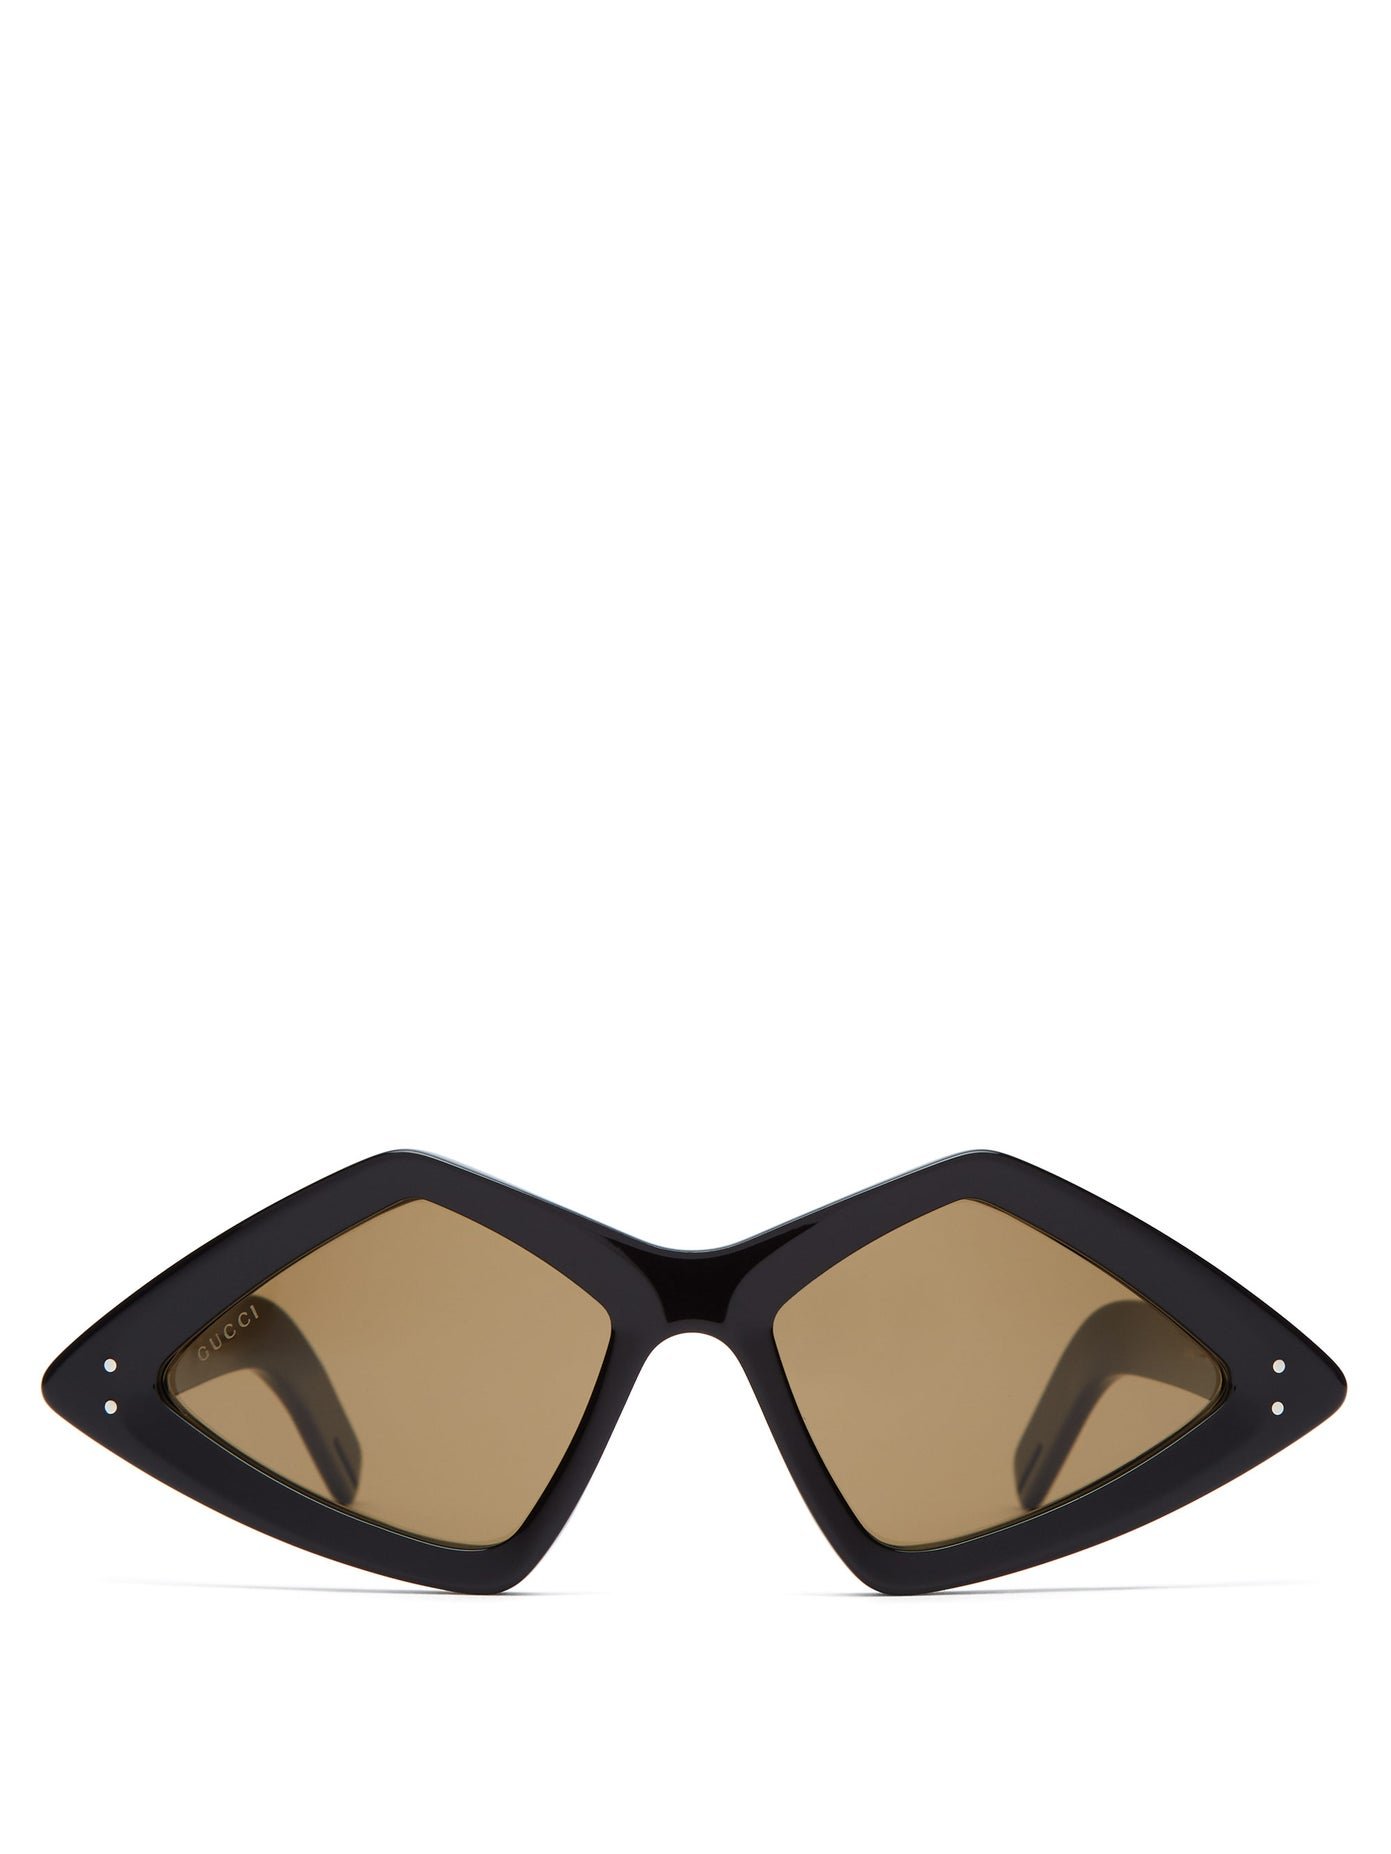 Diamond acetate sunglasses | Gucci 